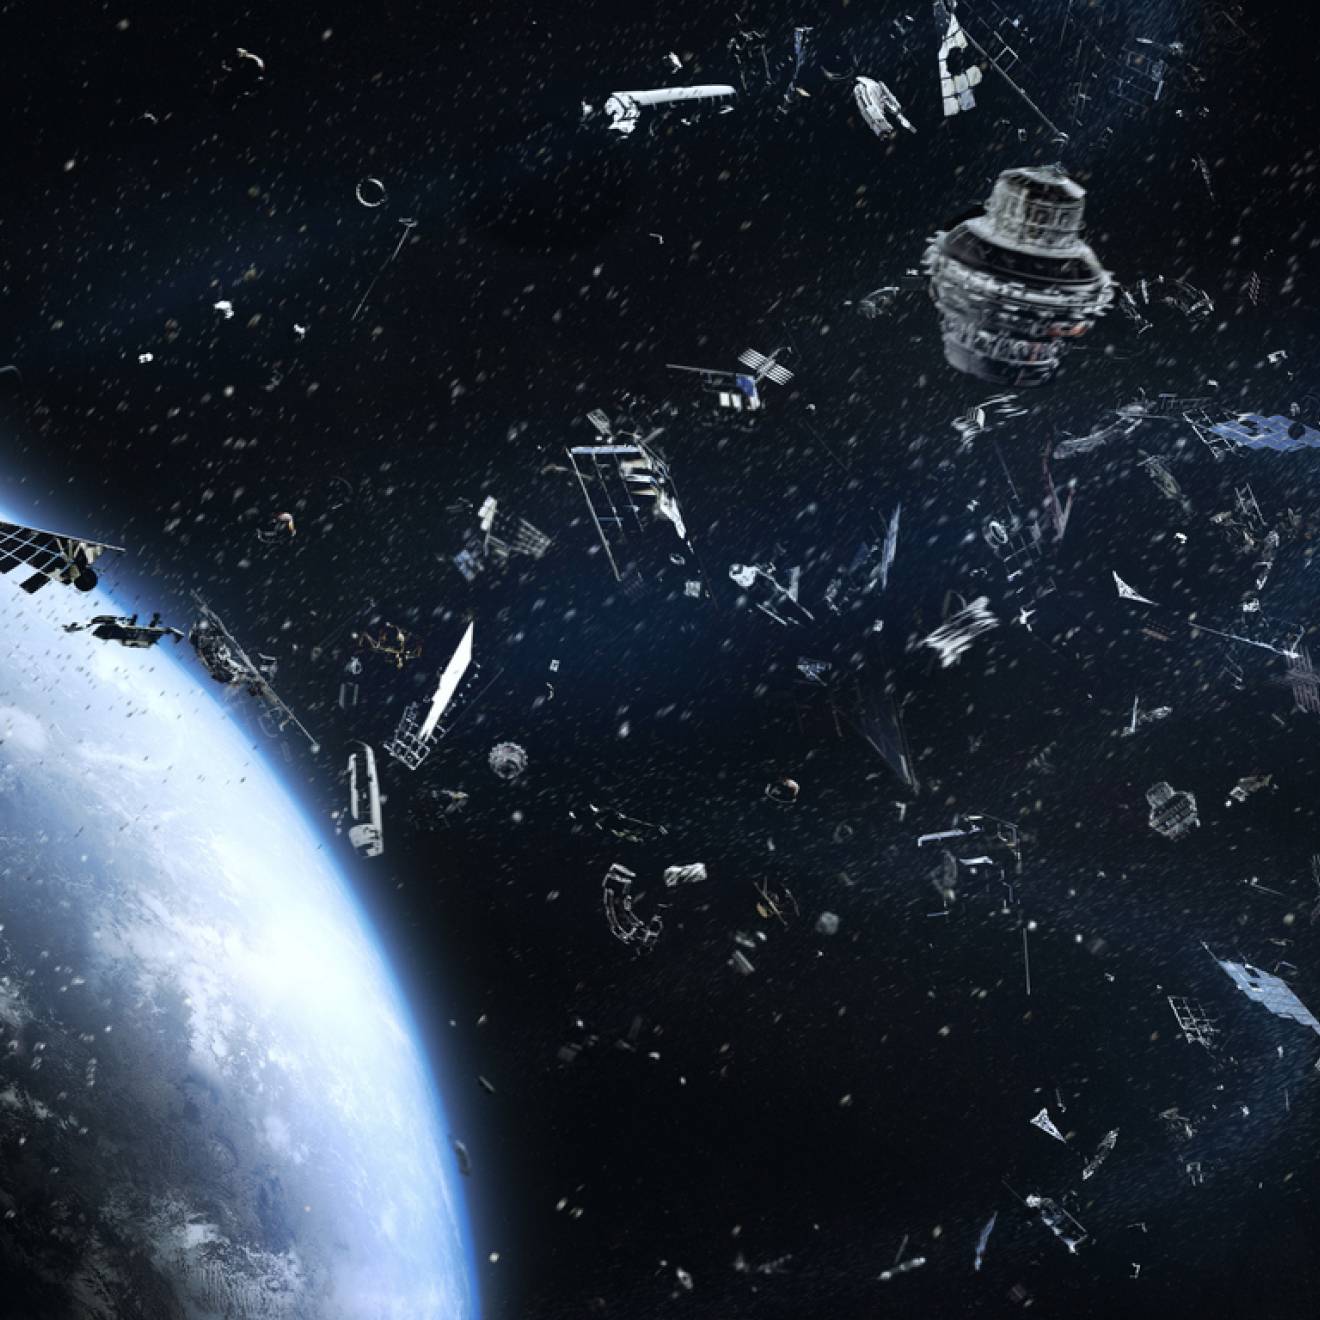 Artist's rendering of a cloud of metal scrap floating in orbit above earth, seen from space